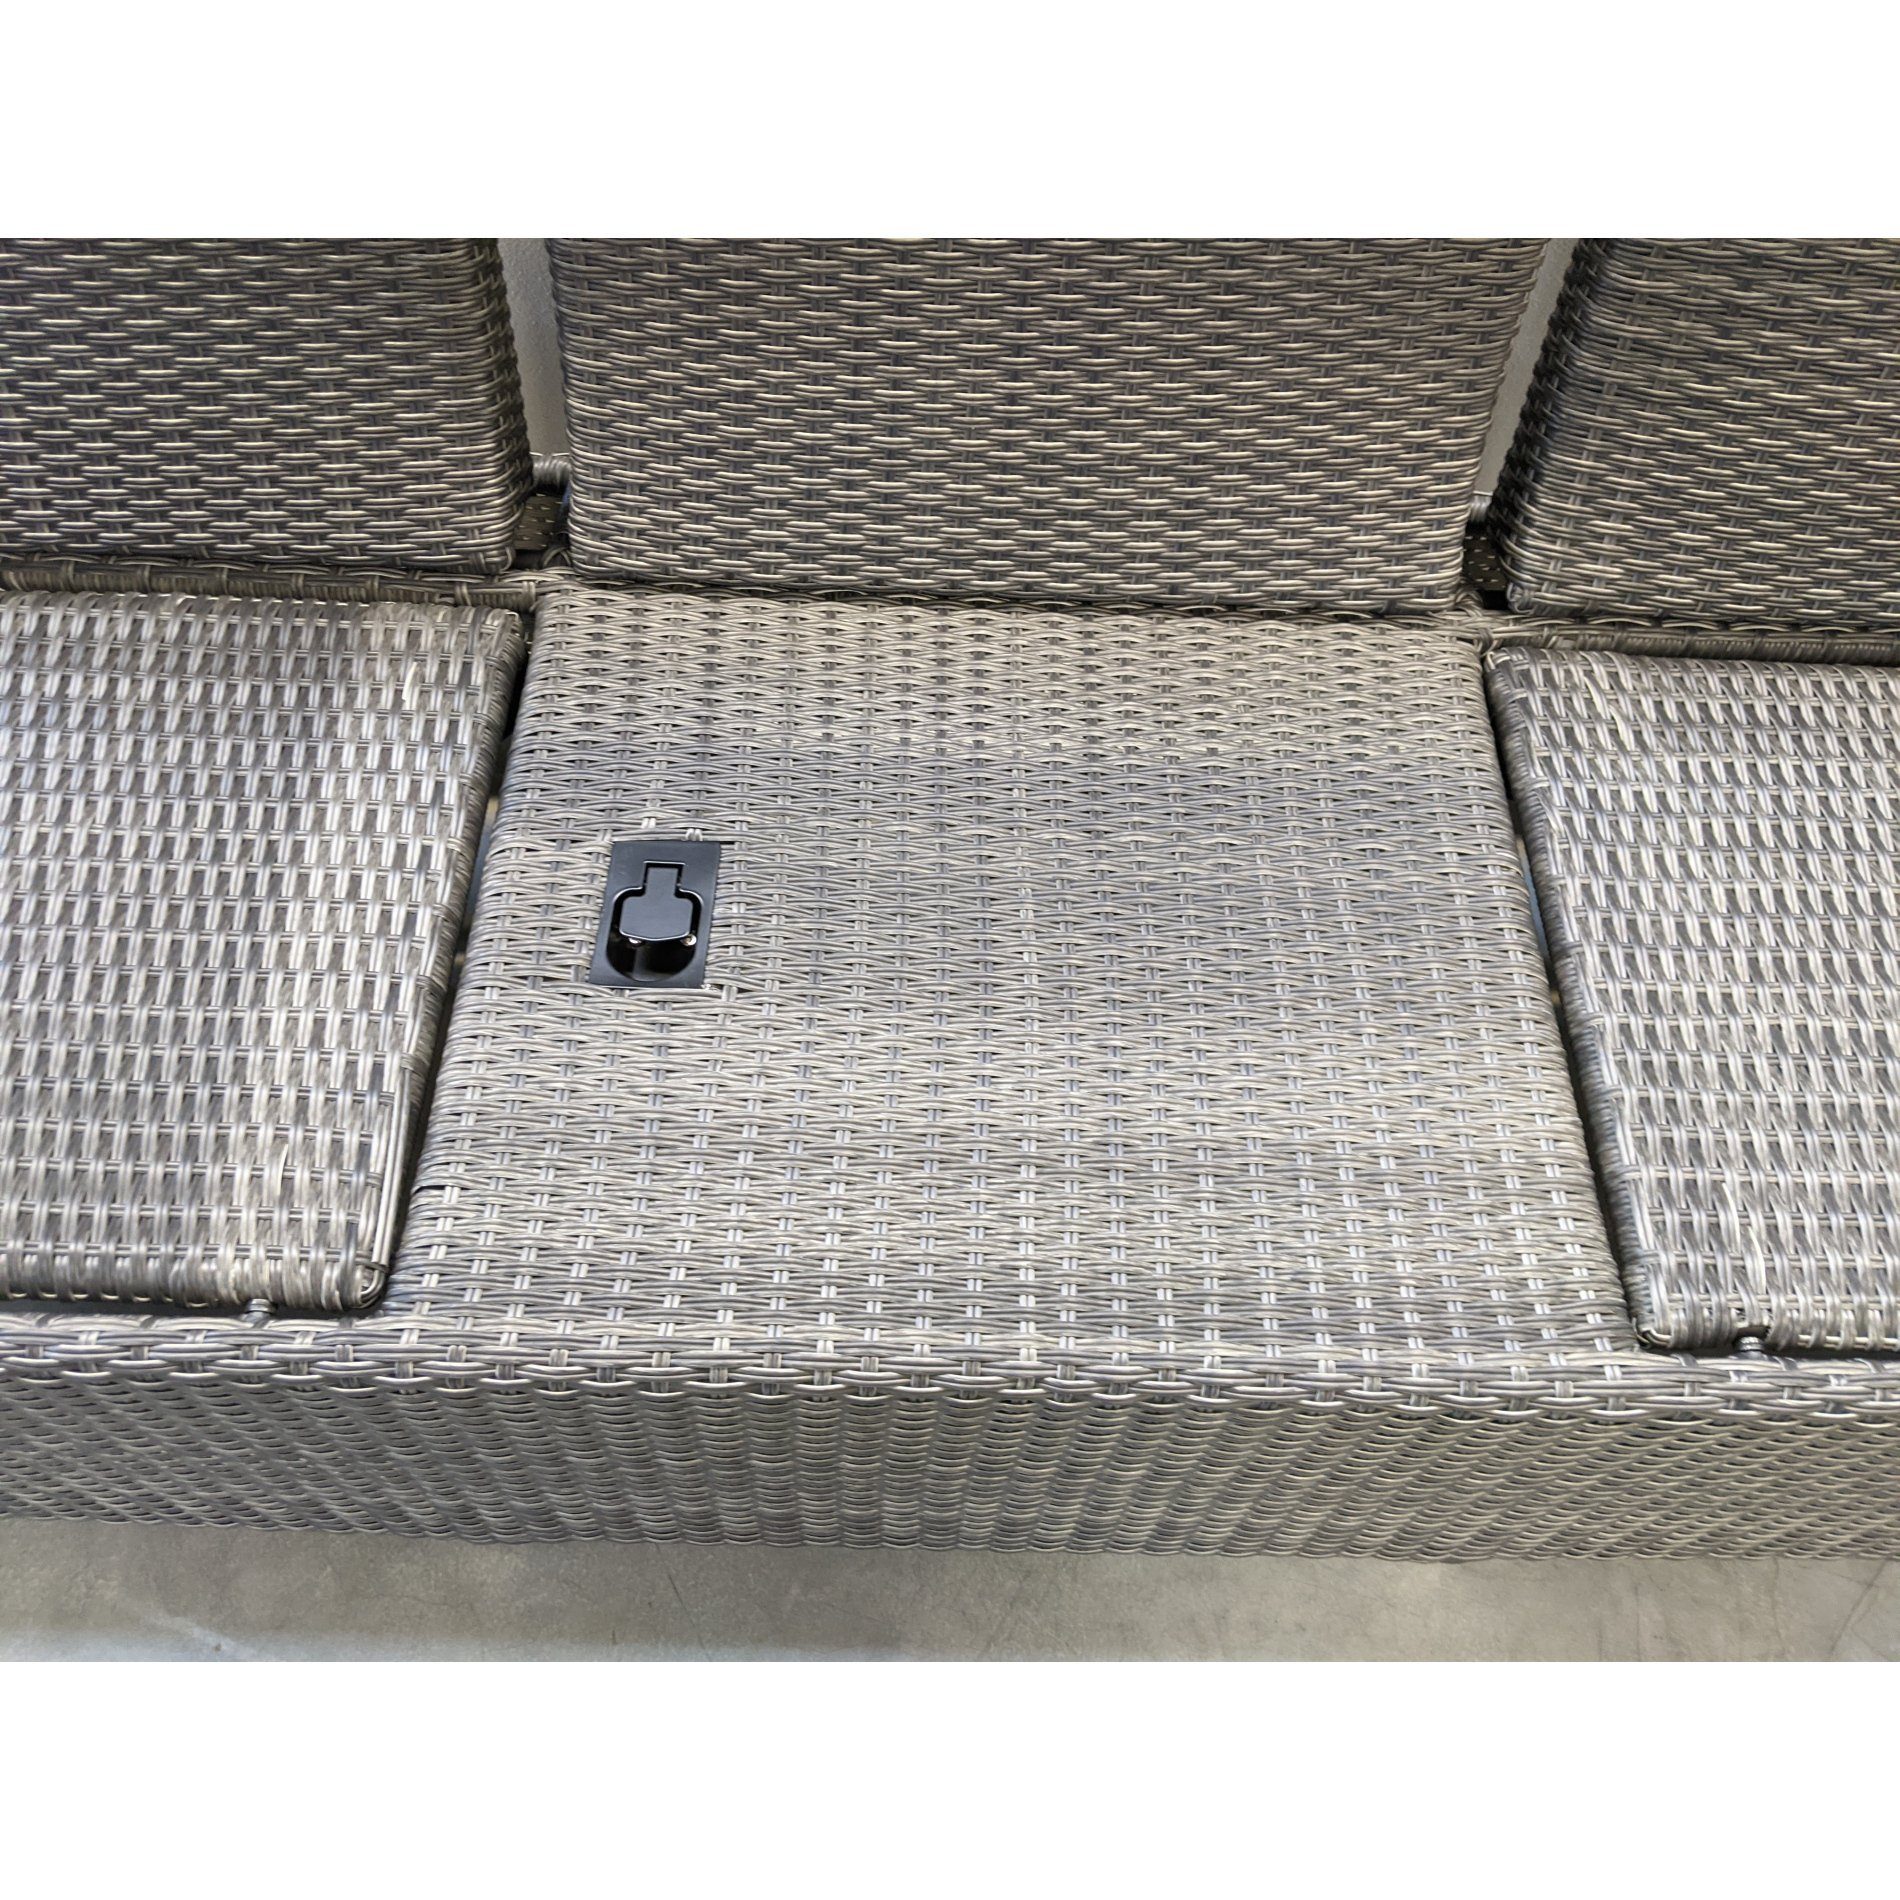 Ploß "Rocking Comfort" 3-Sitzer Loungesofa, Gestell Aluminium, Geflecht Polyrattan grau-braun meliert, Detail Verstellmechanismus